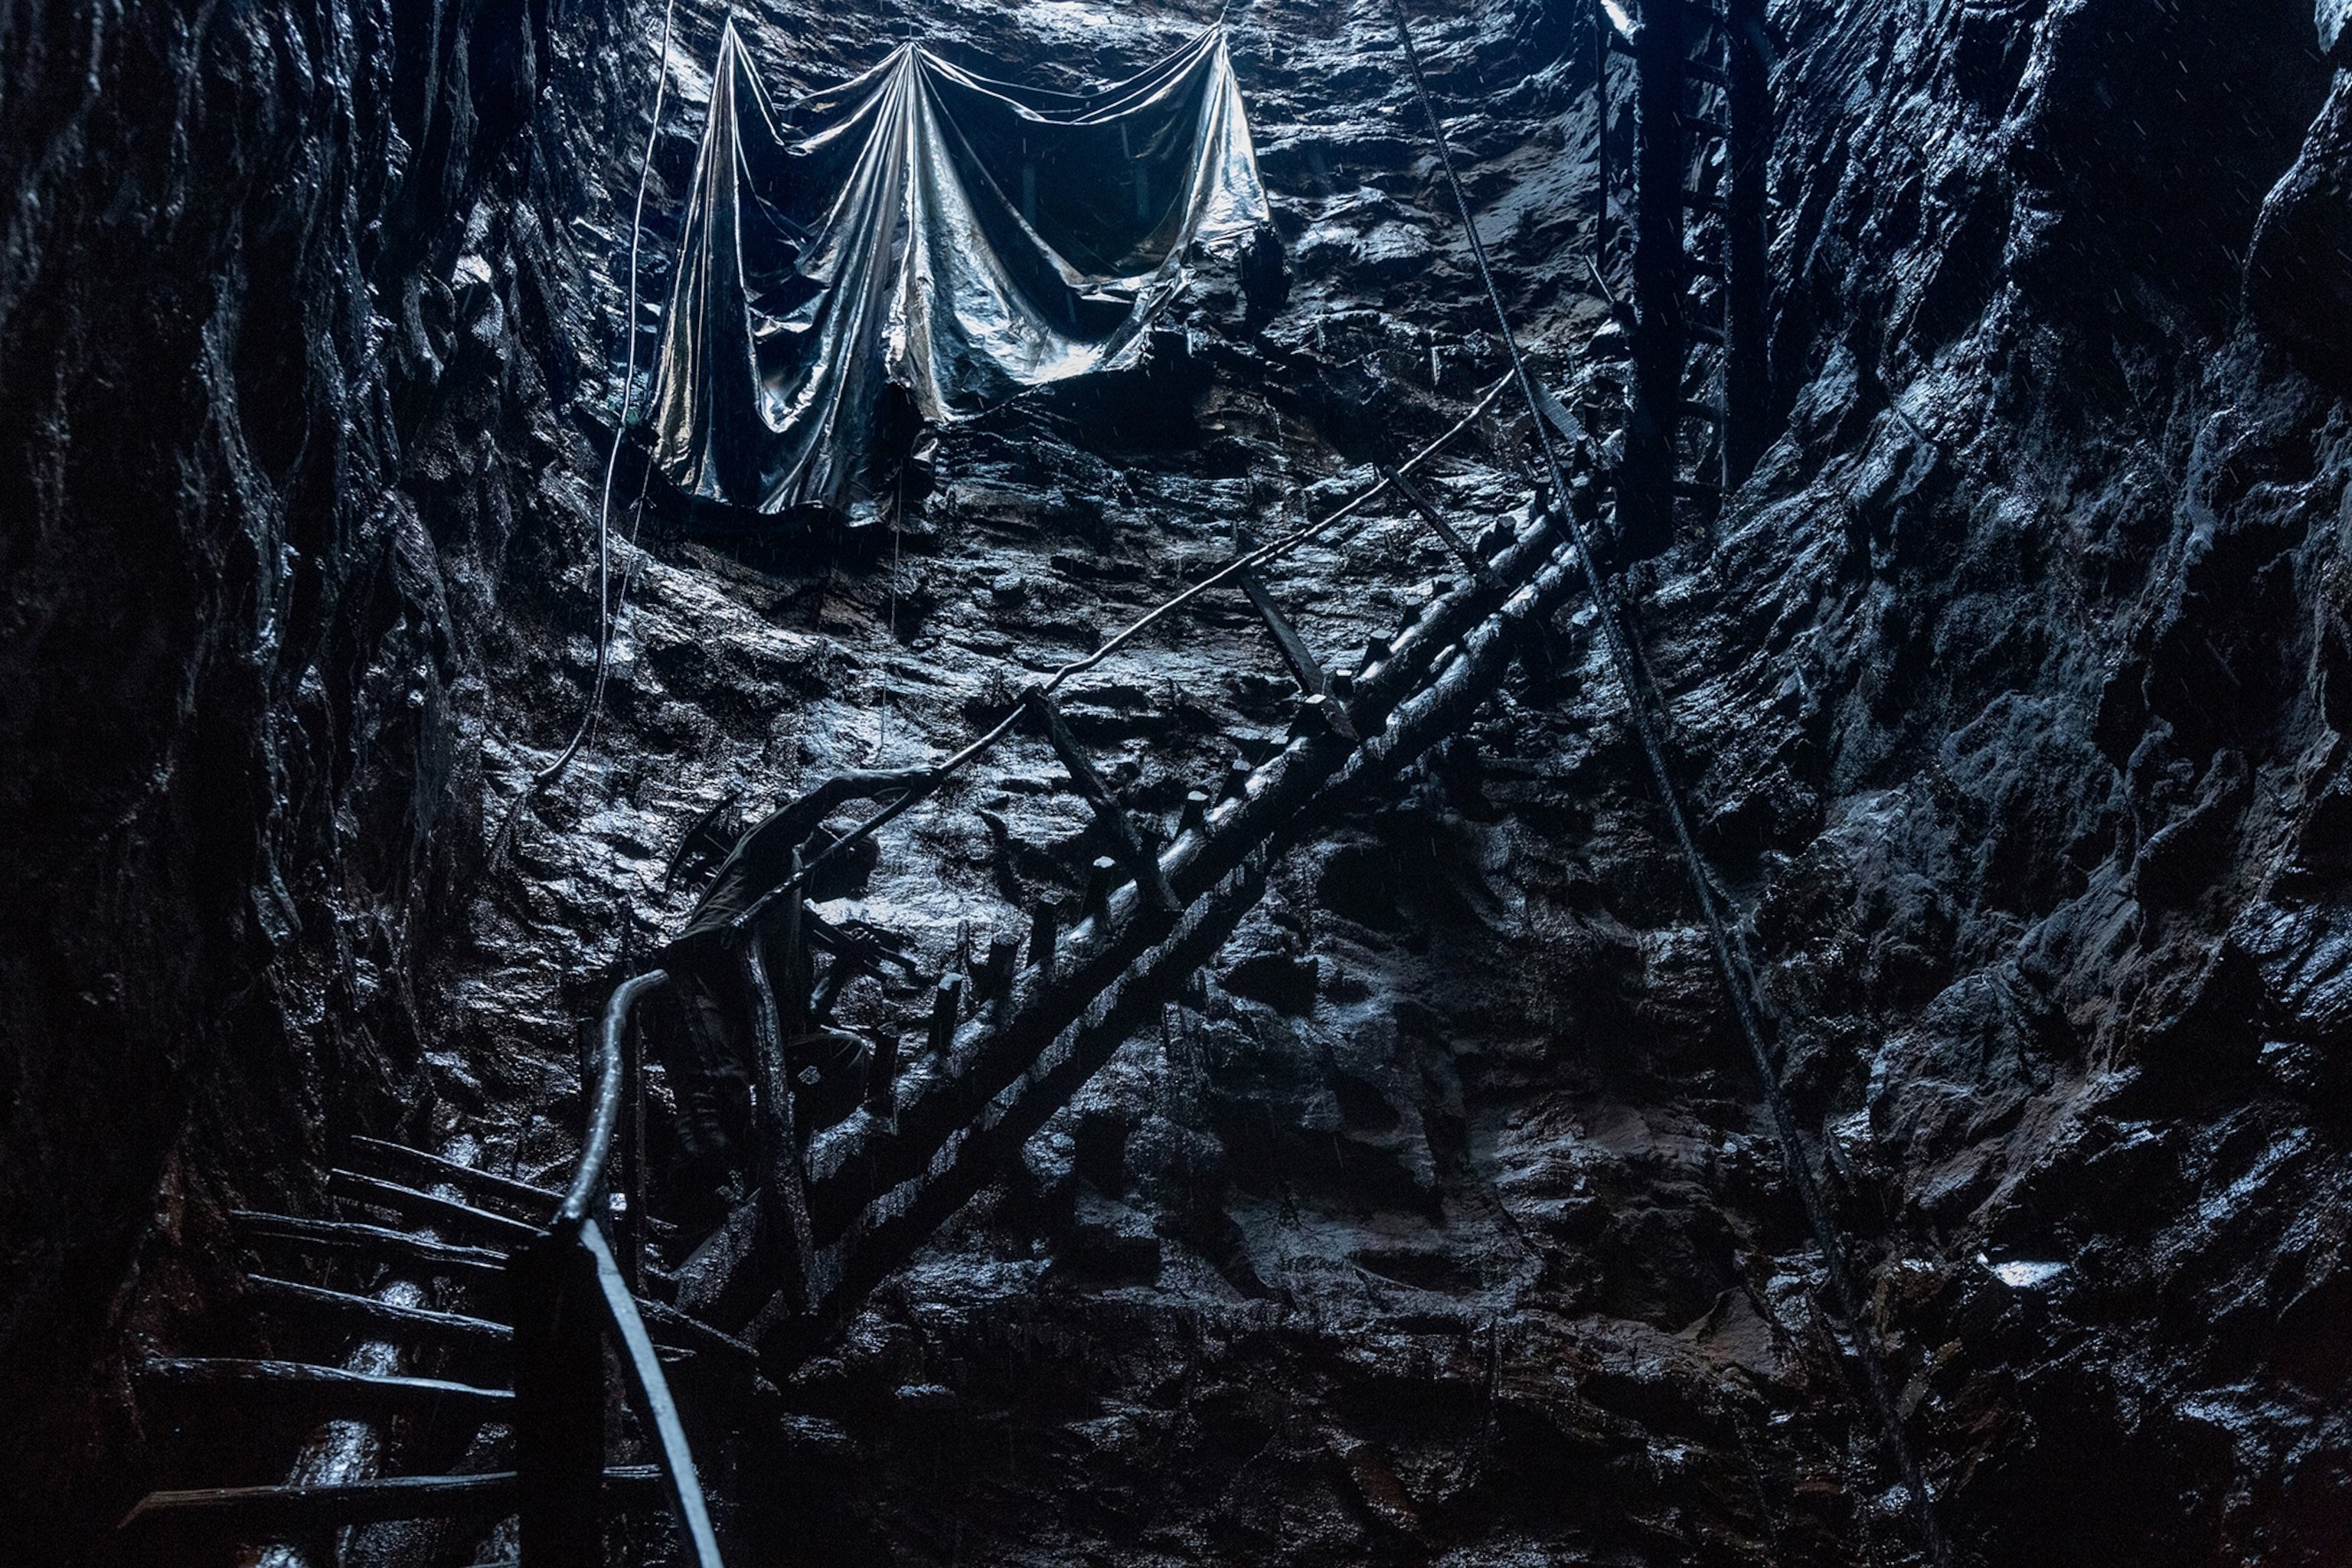 Robb Kendrick: Life in India's Coal Mines